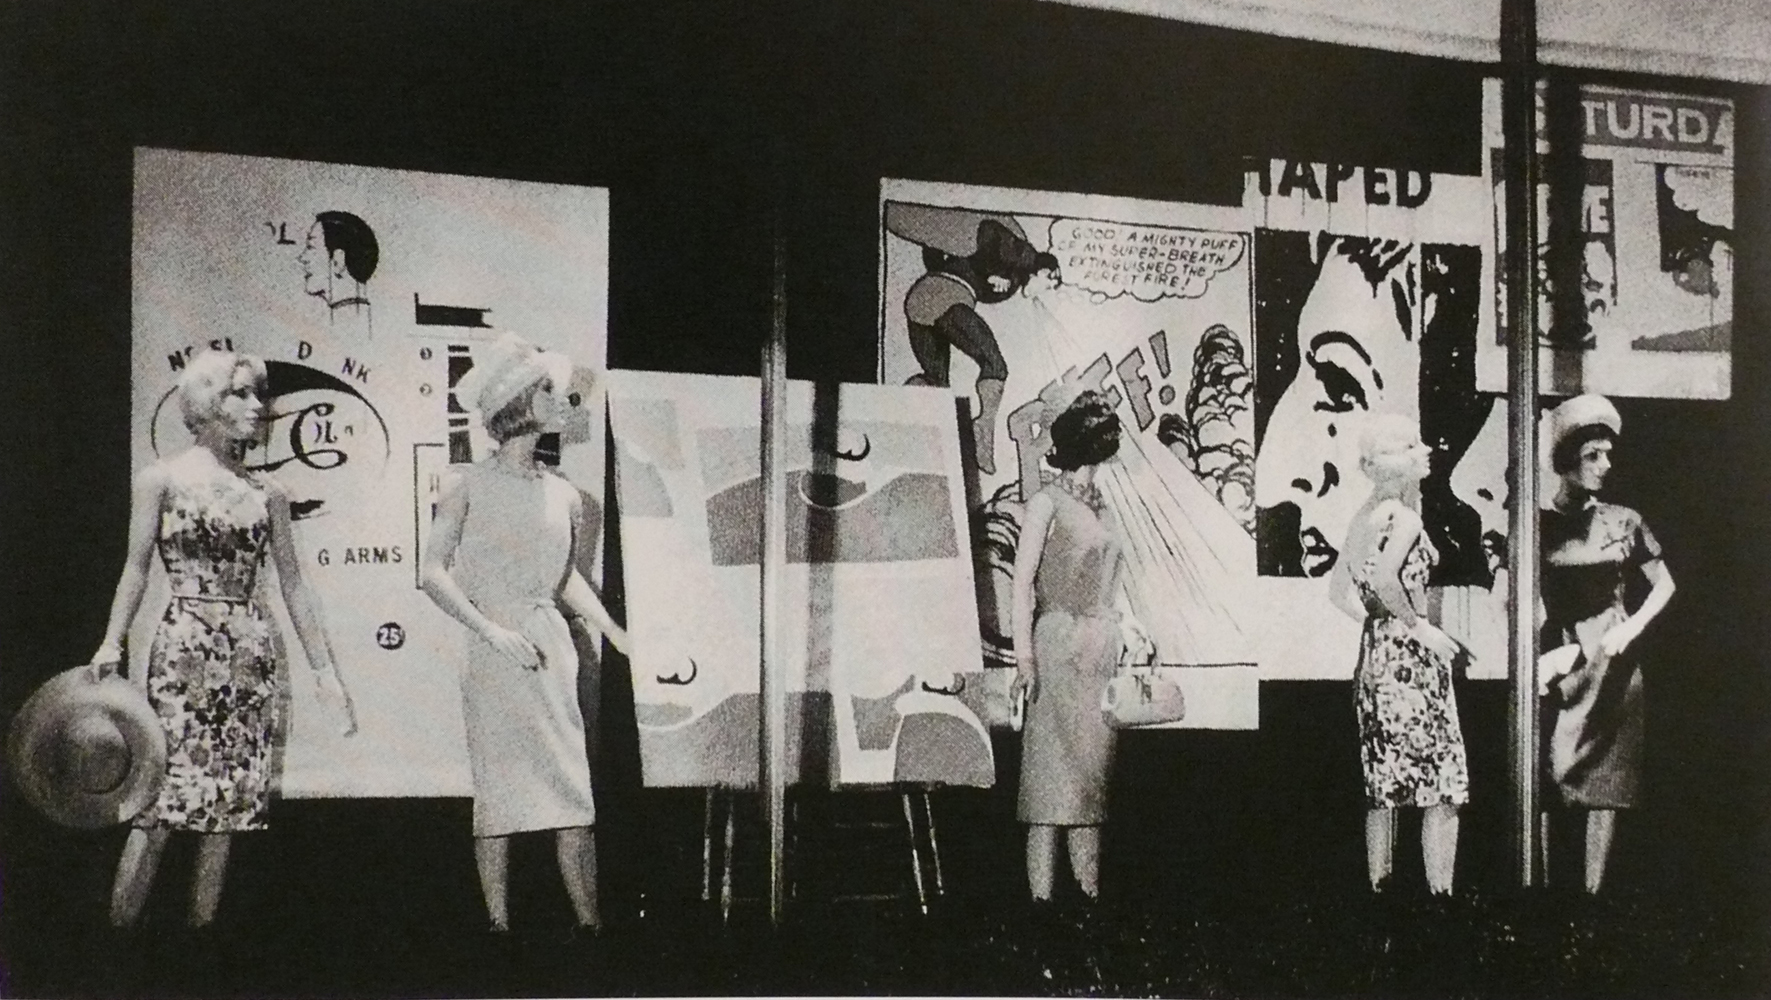 Andy Warhol‚Äôs Bonwit Teller display, 1961